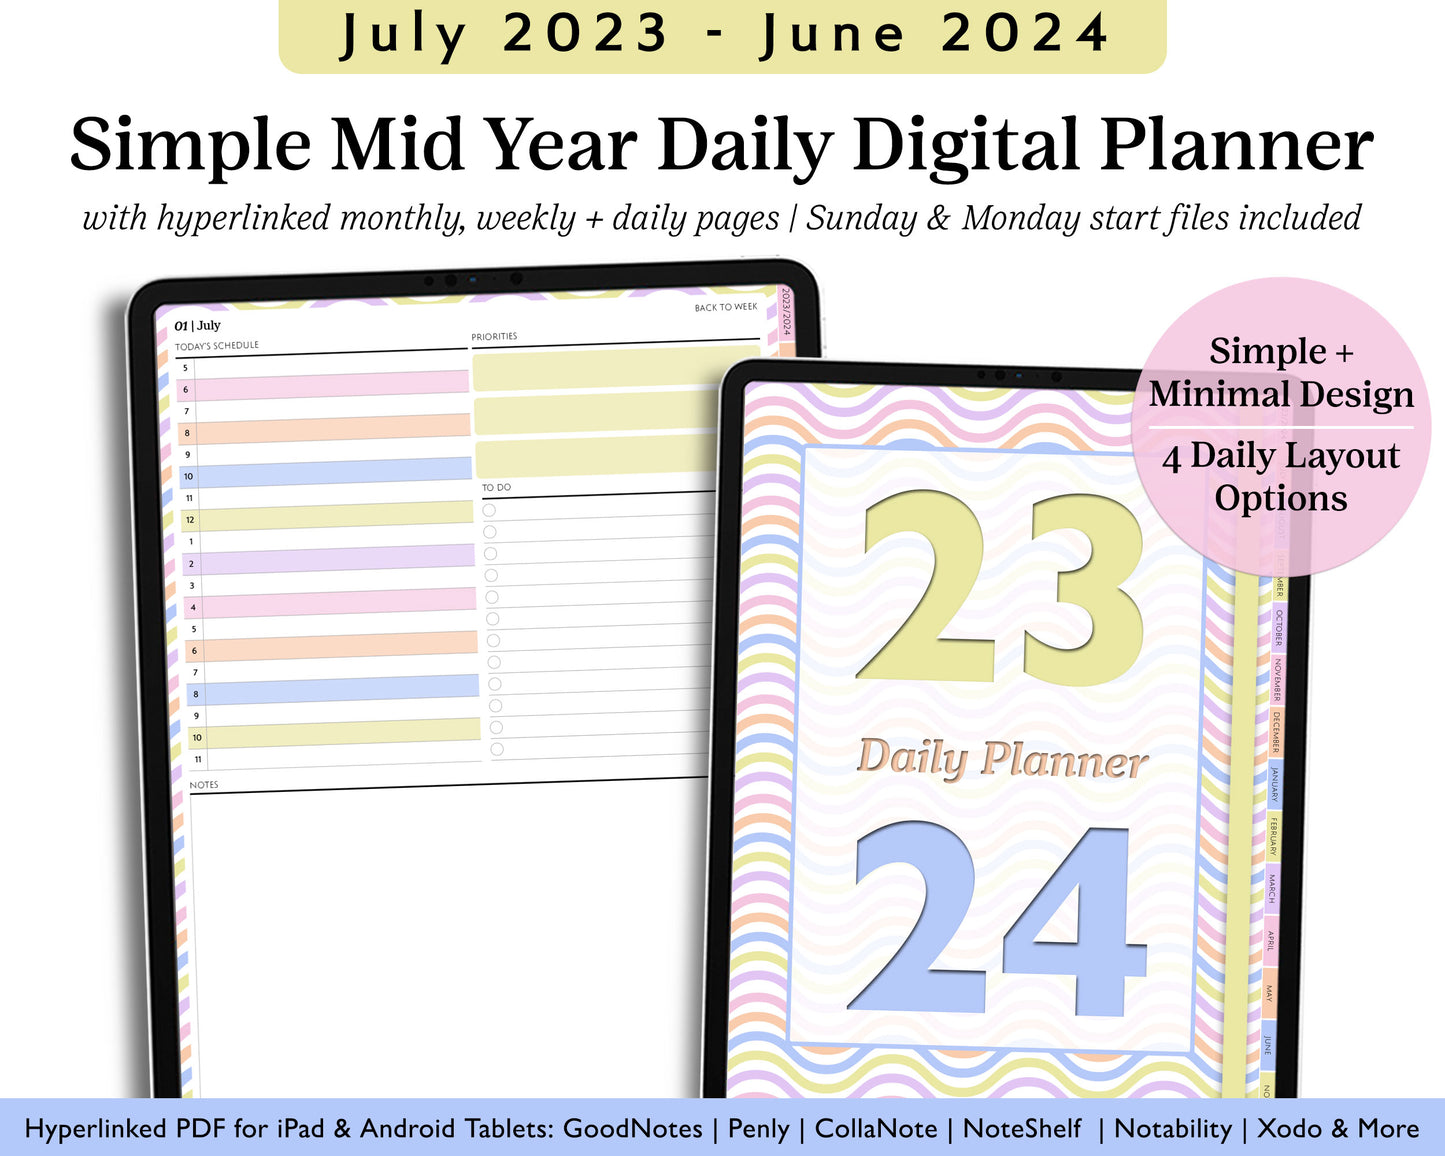 2023 2024 Mid Year Daily Digital Planner | Minimal Modern Simple Agenda